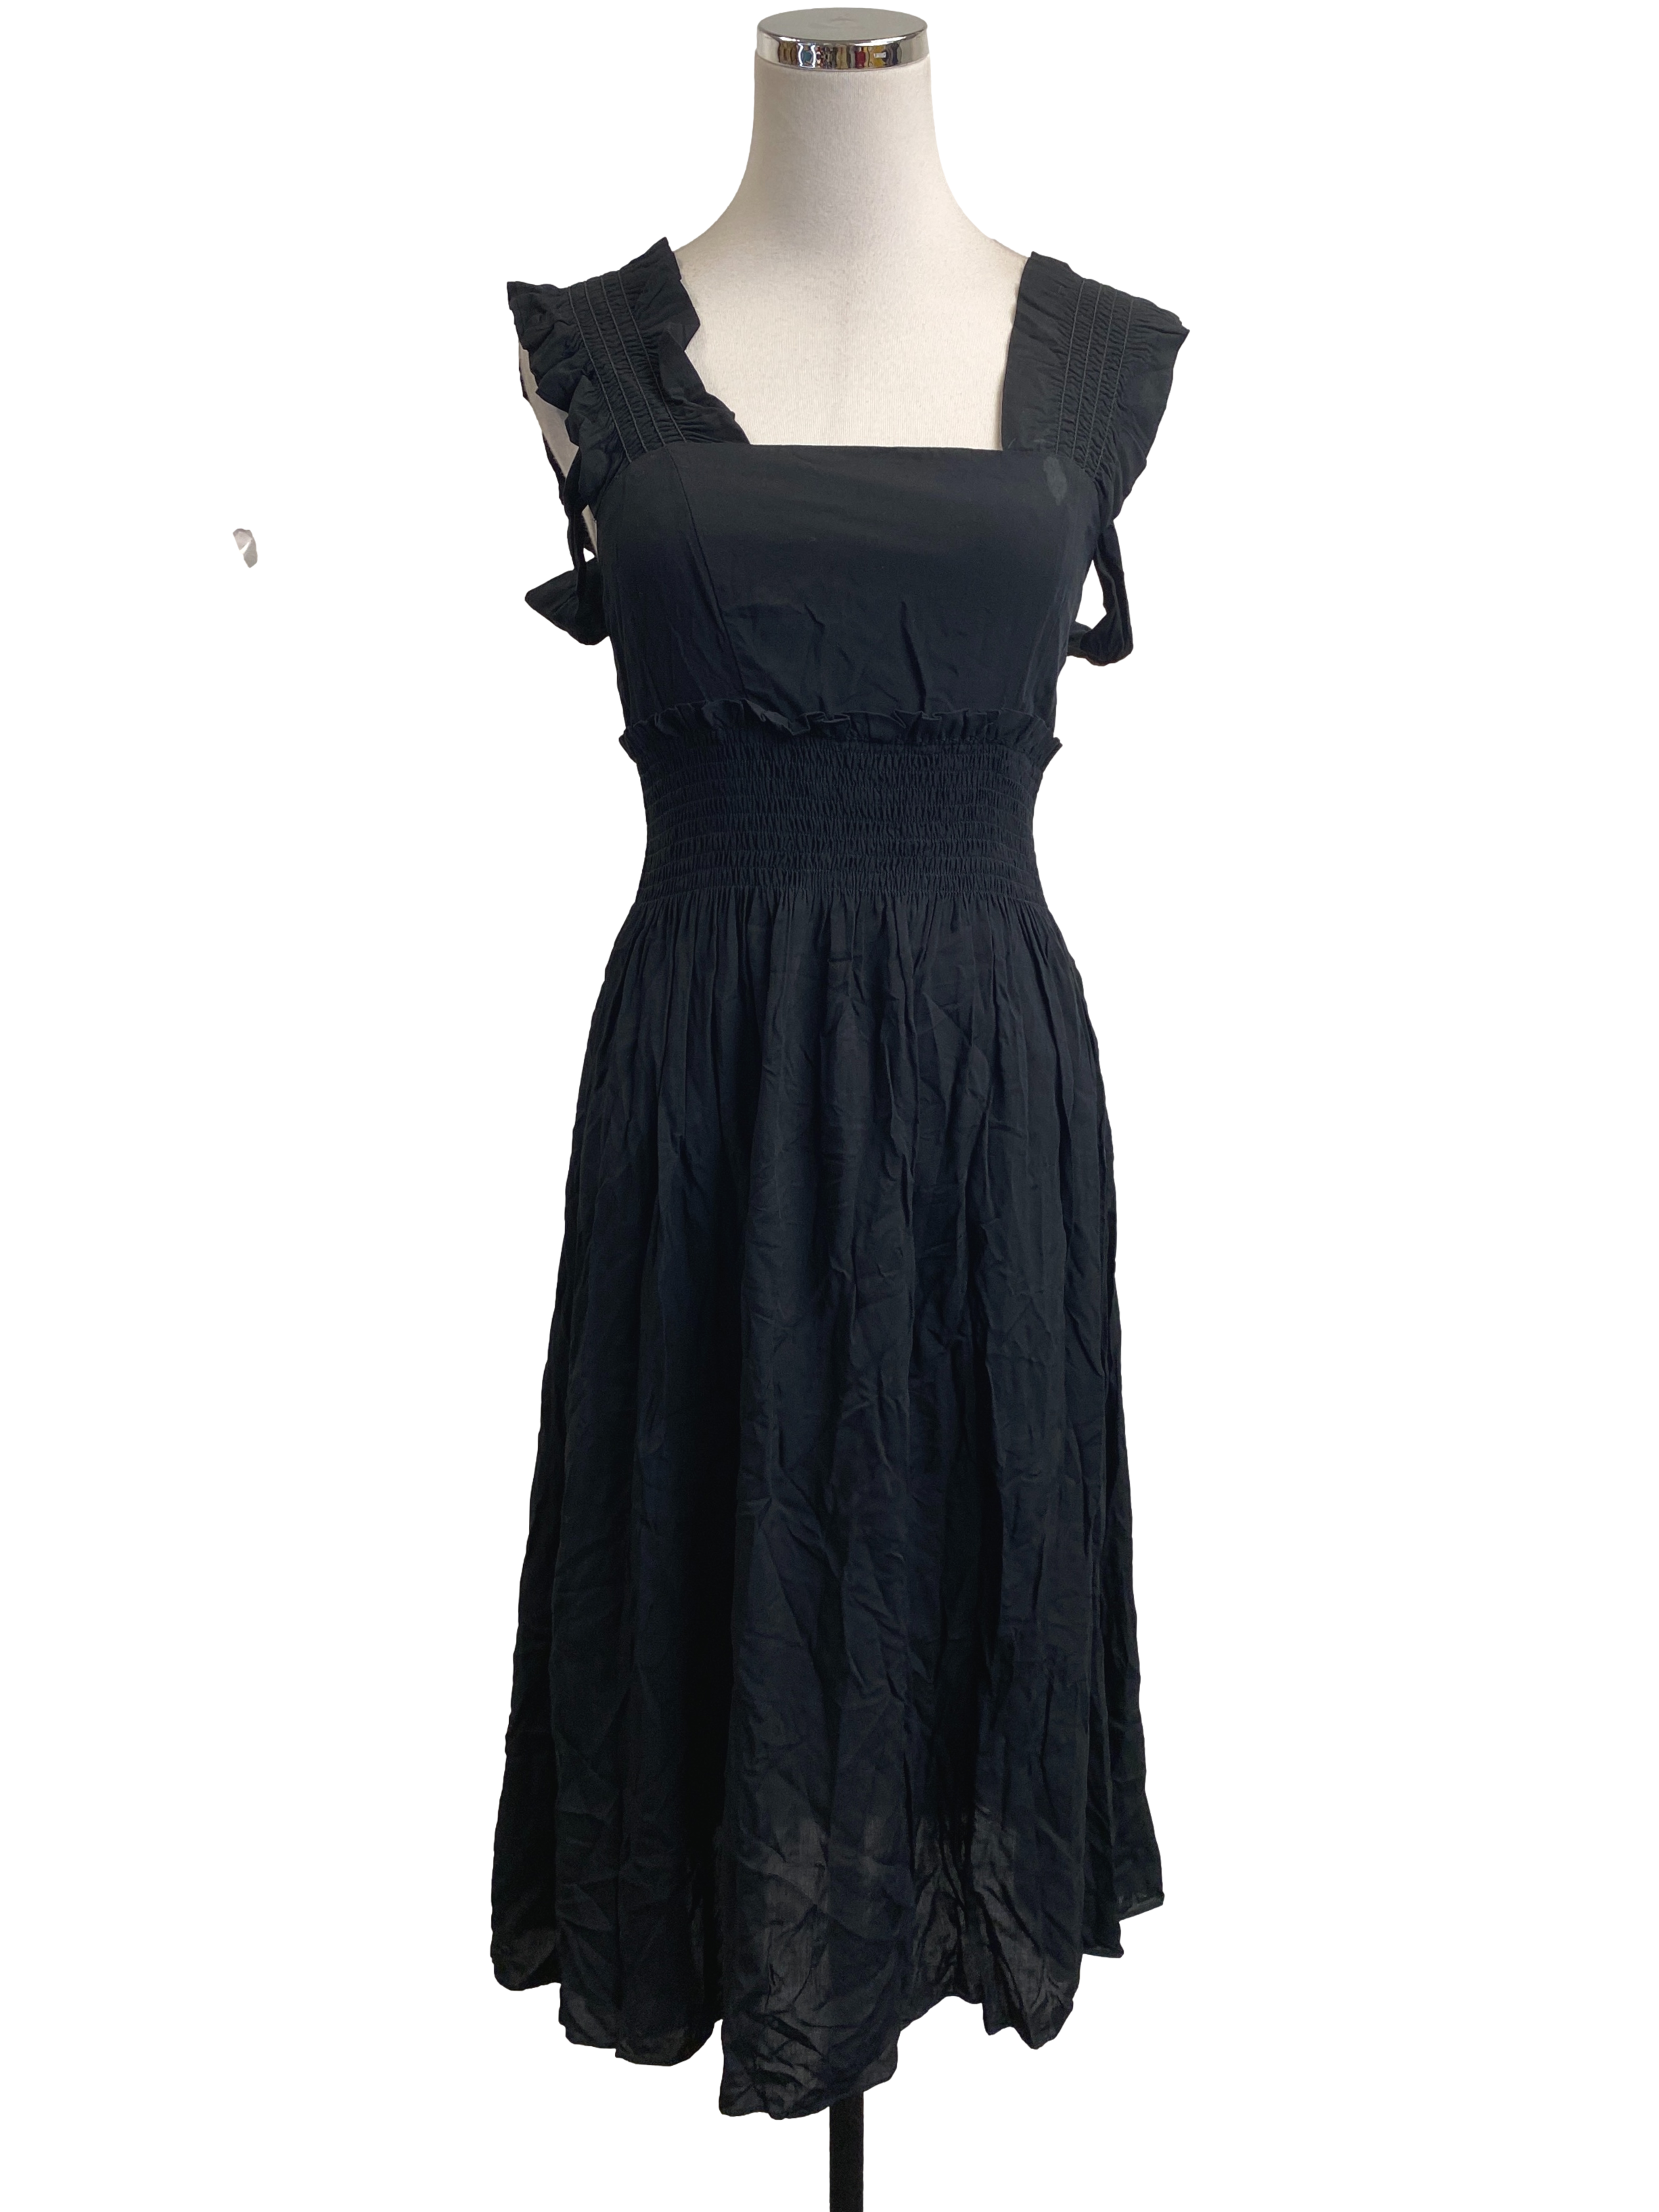 Black Ruffle Sleeve Smocked Dress